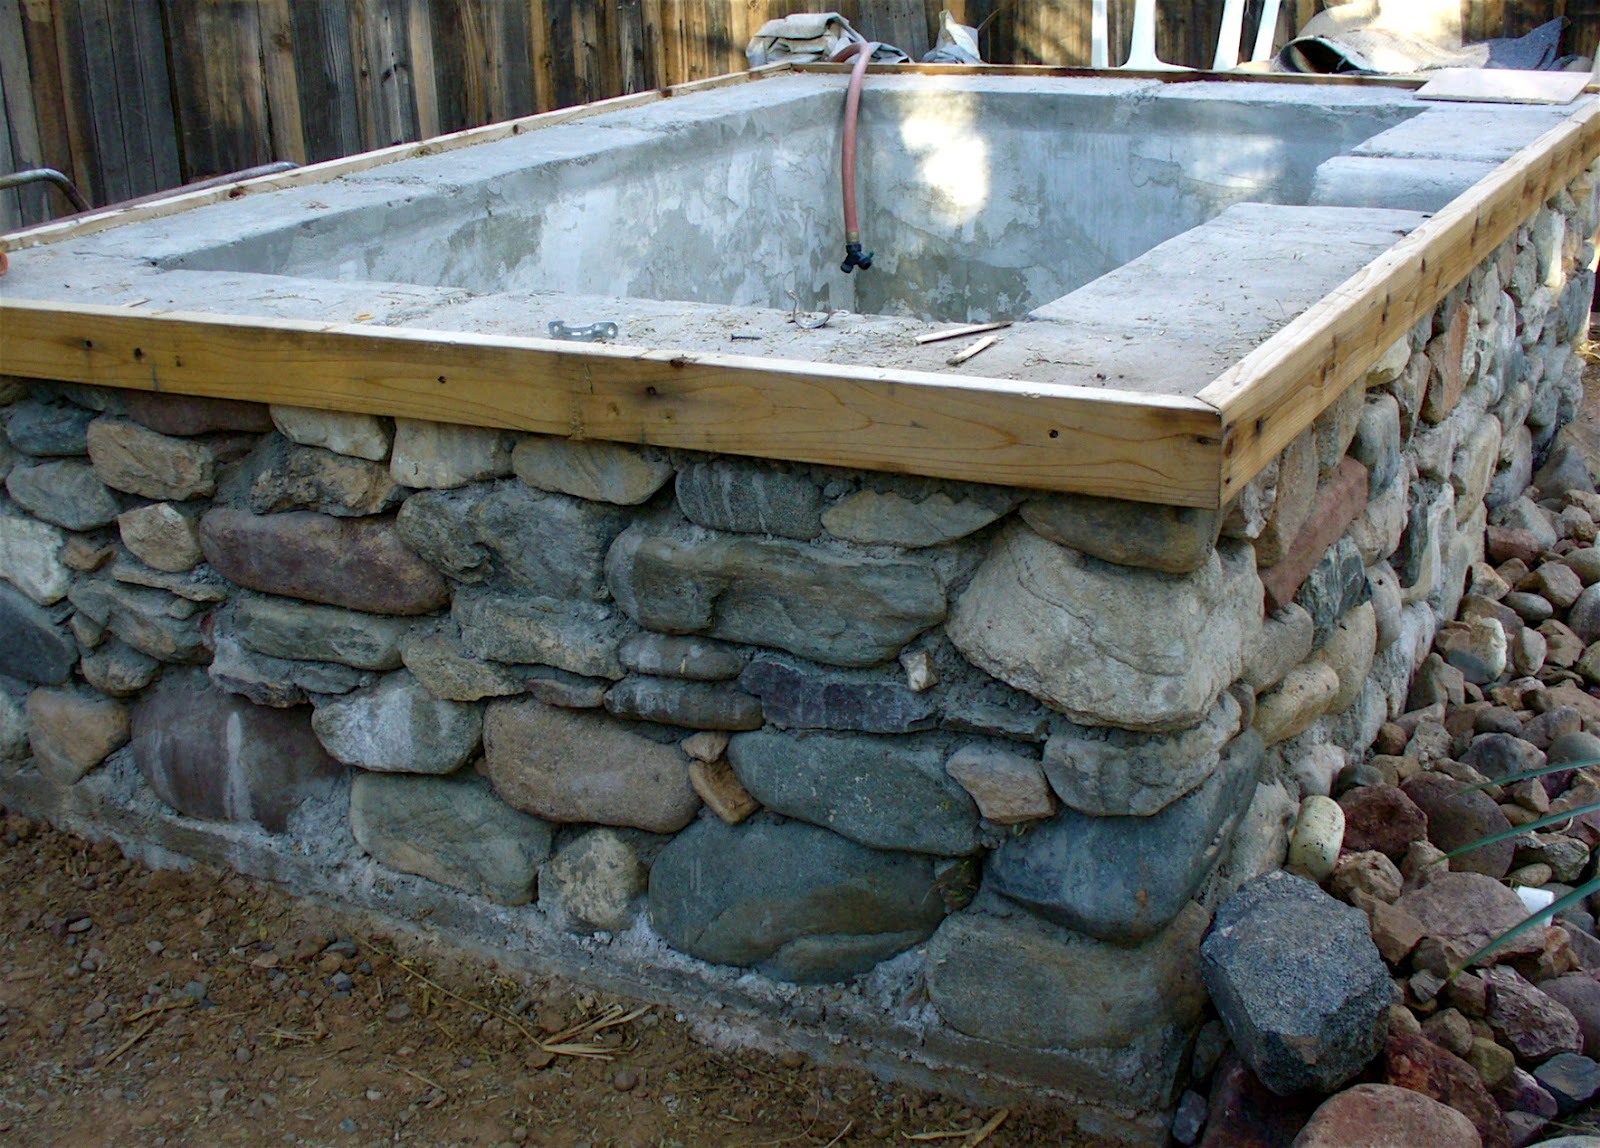 Concrete and stone hot tub | Patio ideas | Pinterest